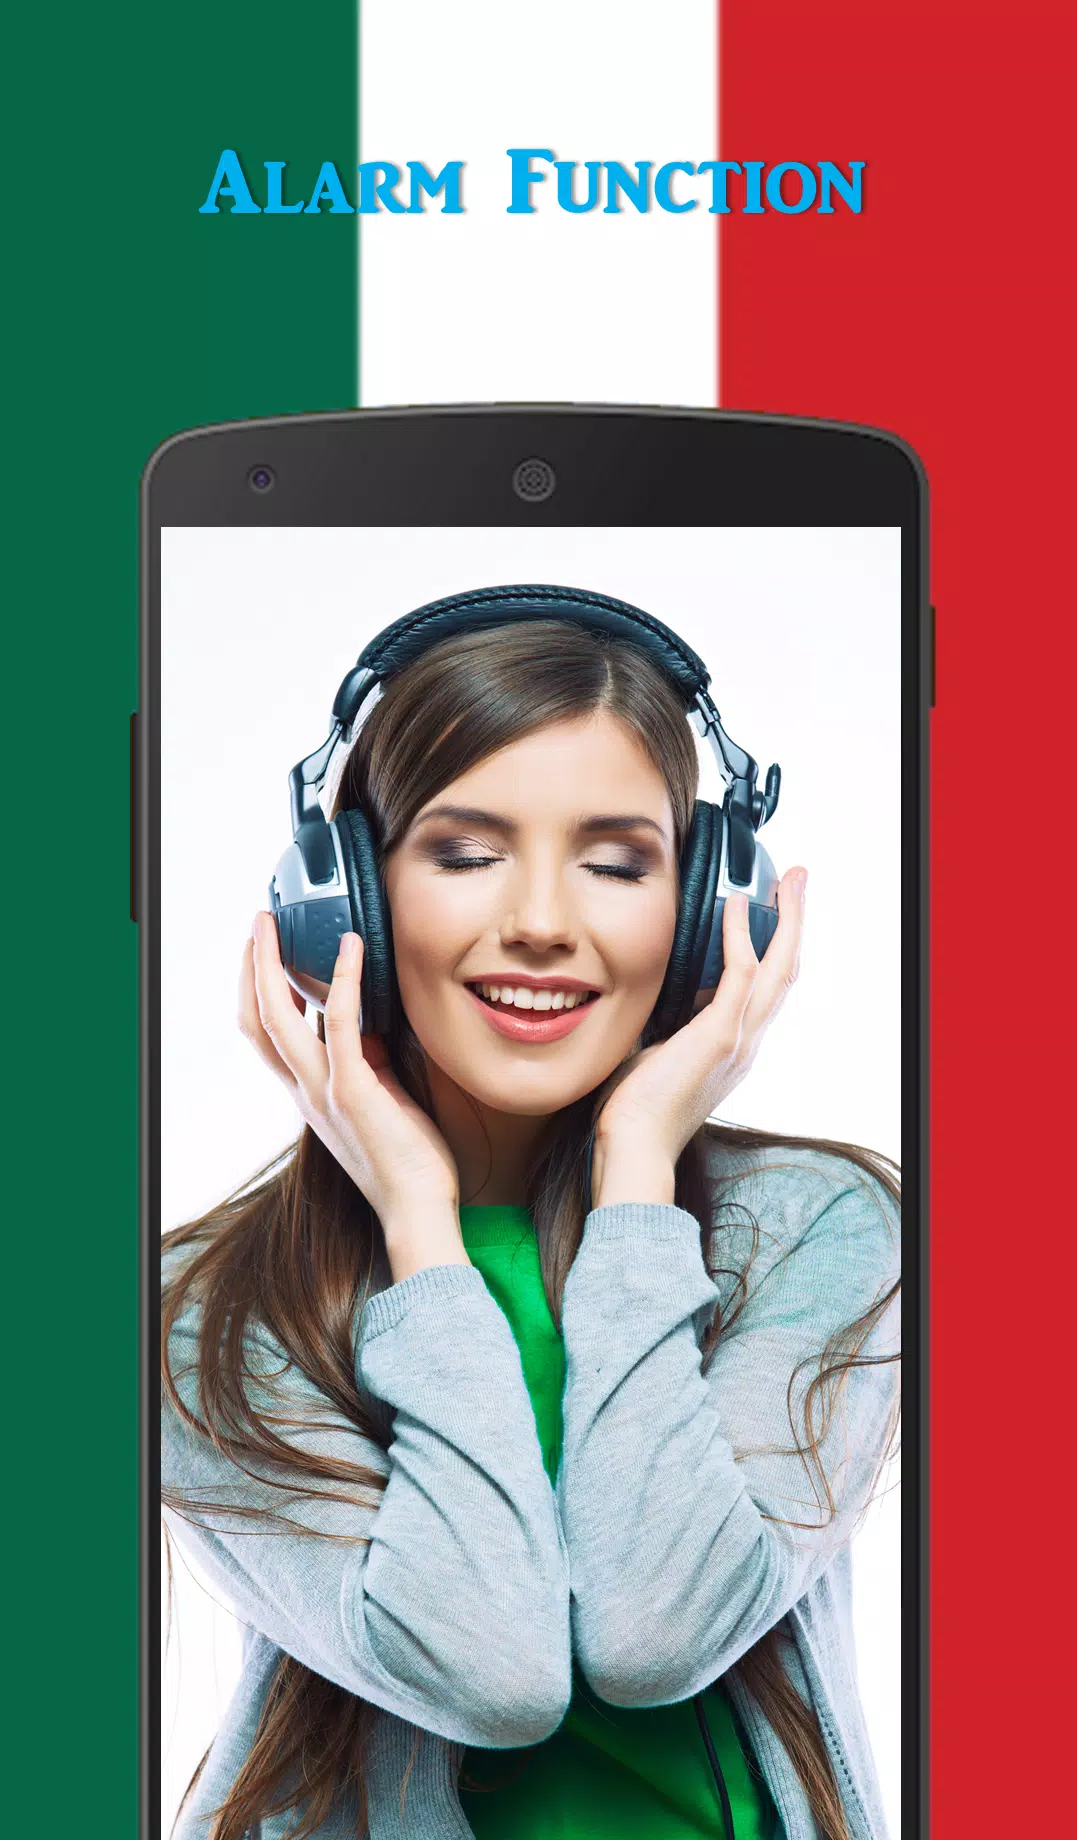 Radio Centro 97.7 FM APP - Mexico Radio Online for Android - APK Download